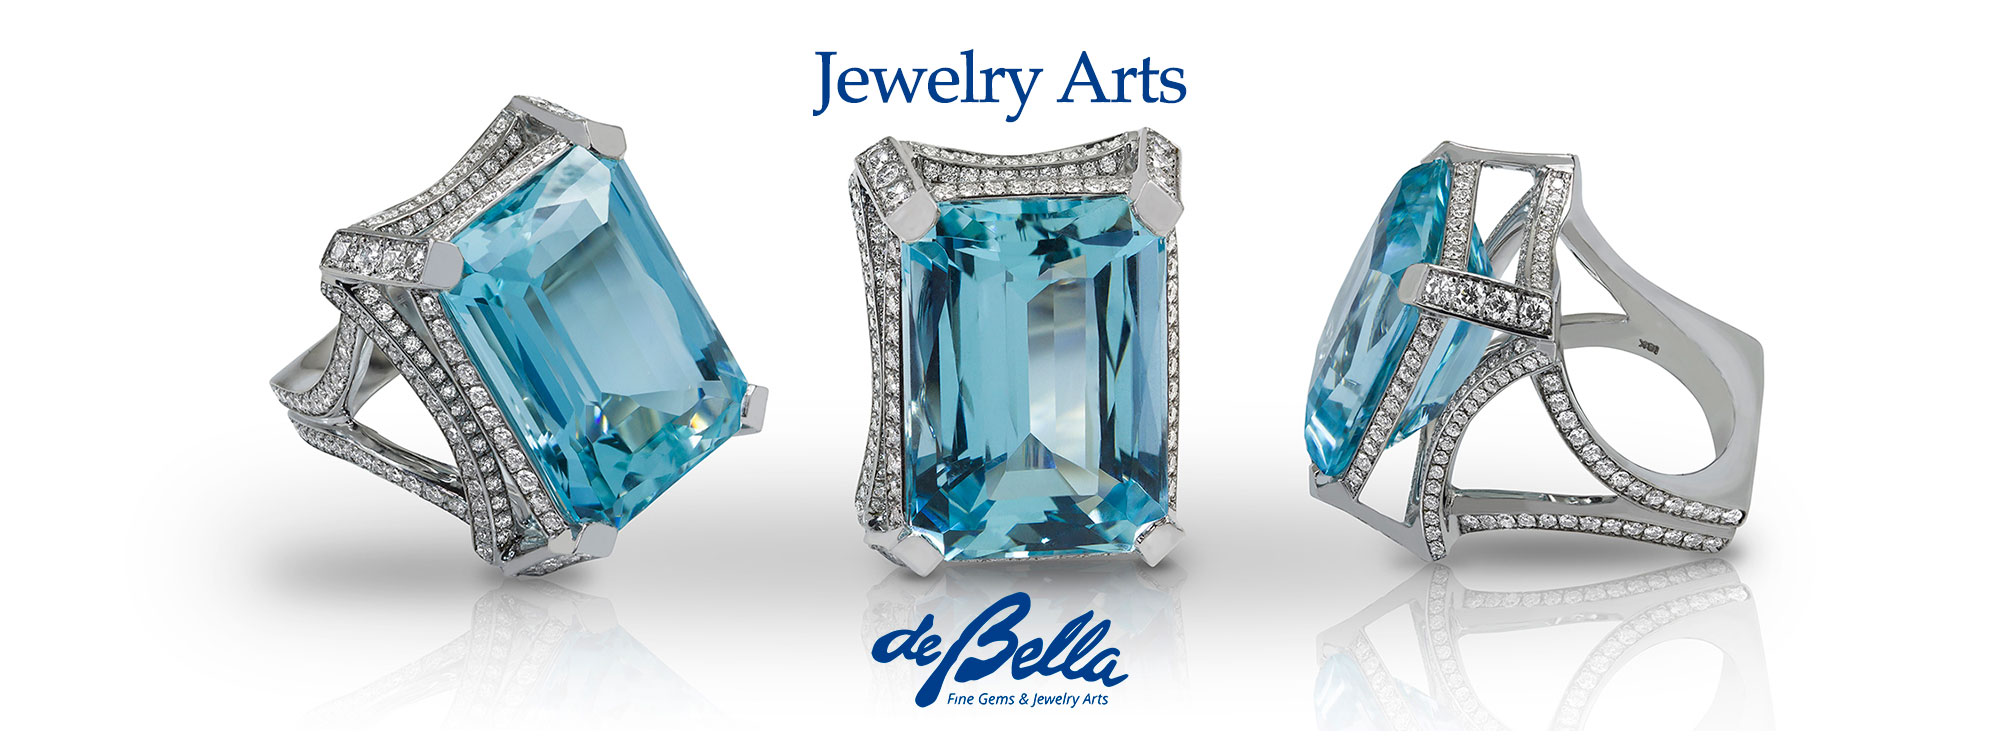 deBella Jewelry Arts